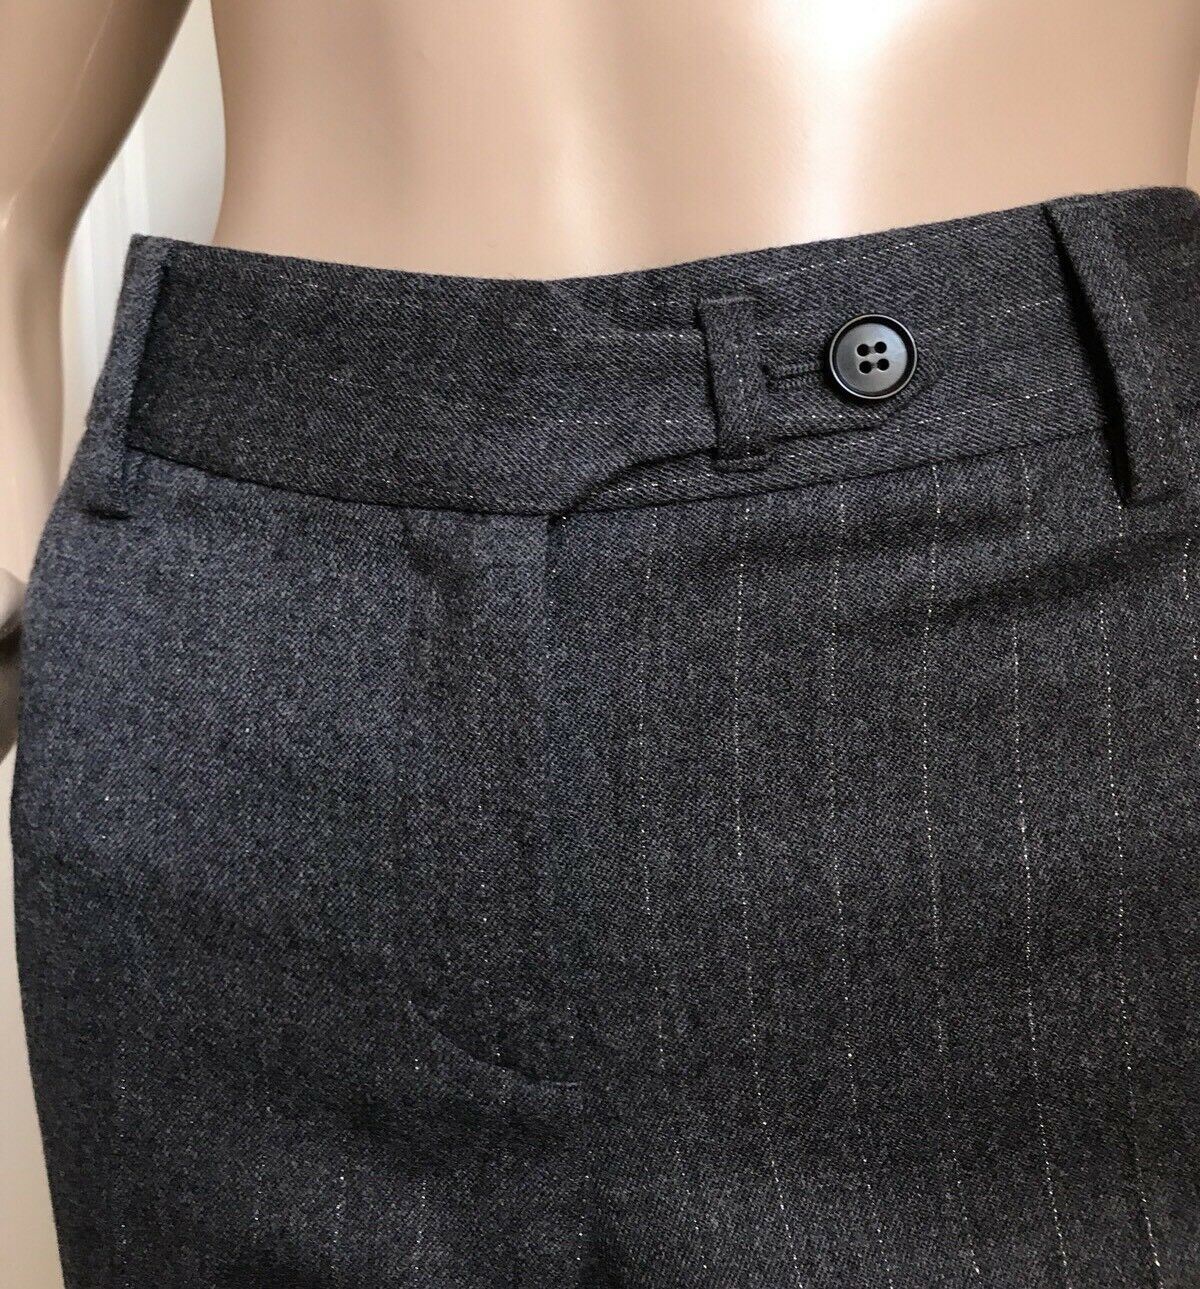 New $990 Roberto Cavalli Women's  Pants Gray Stripped 40 Eu (10 US ) Italy